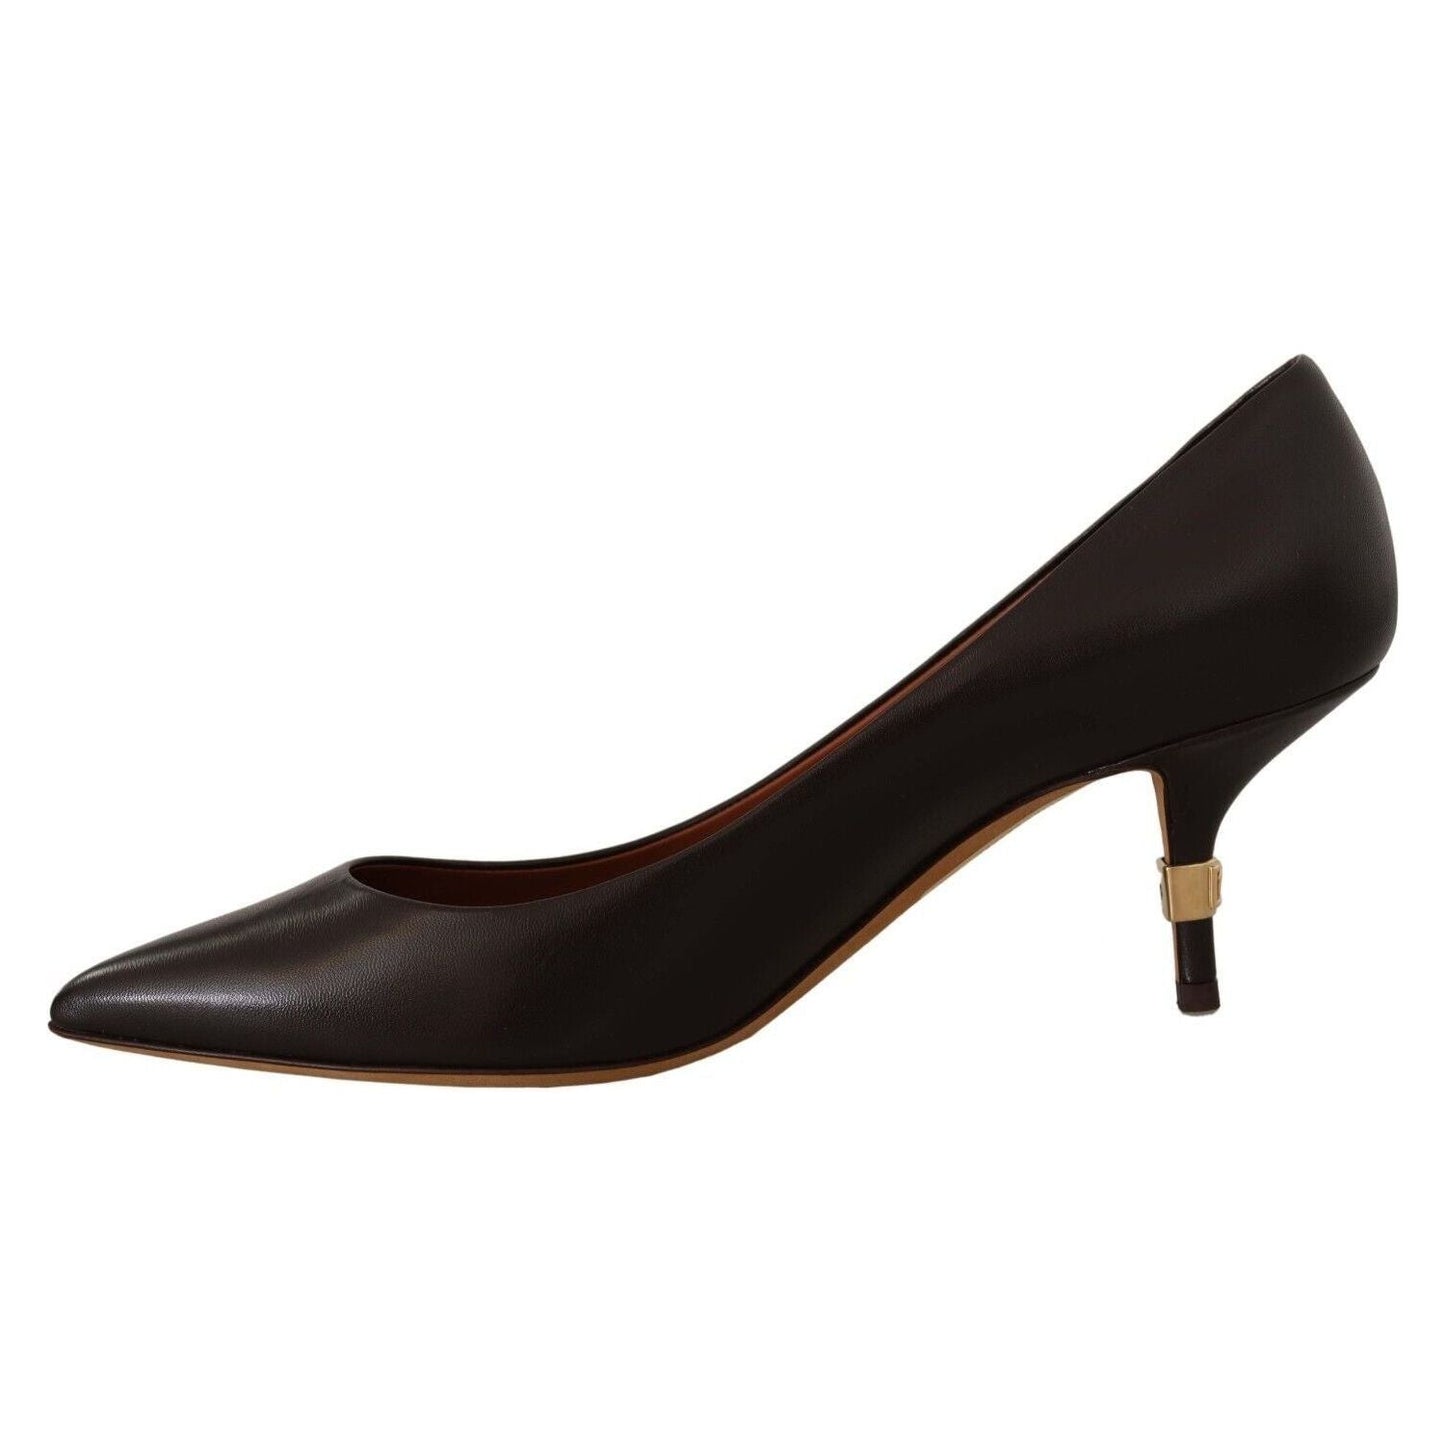 Dolce & Gabbana Elegant Brown Leather Heels Pumps brown-leather-kitten-mid-heels-pumps-shoes s-l1600-9-26-016baa32-25c.jpg